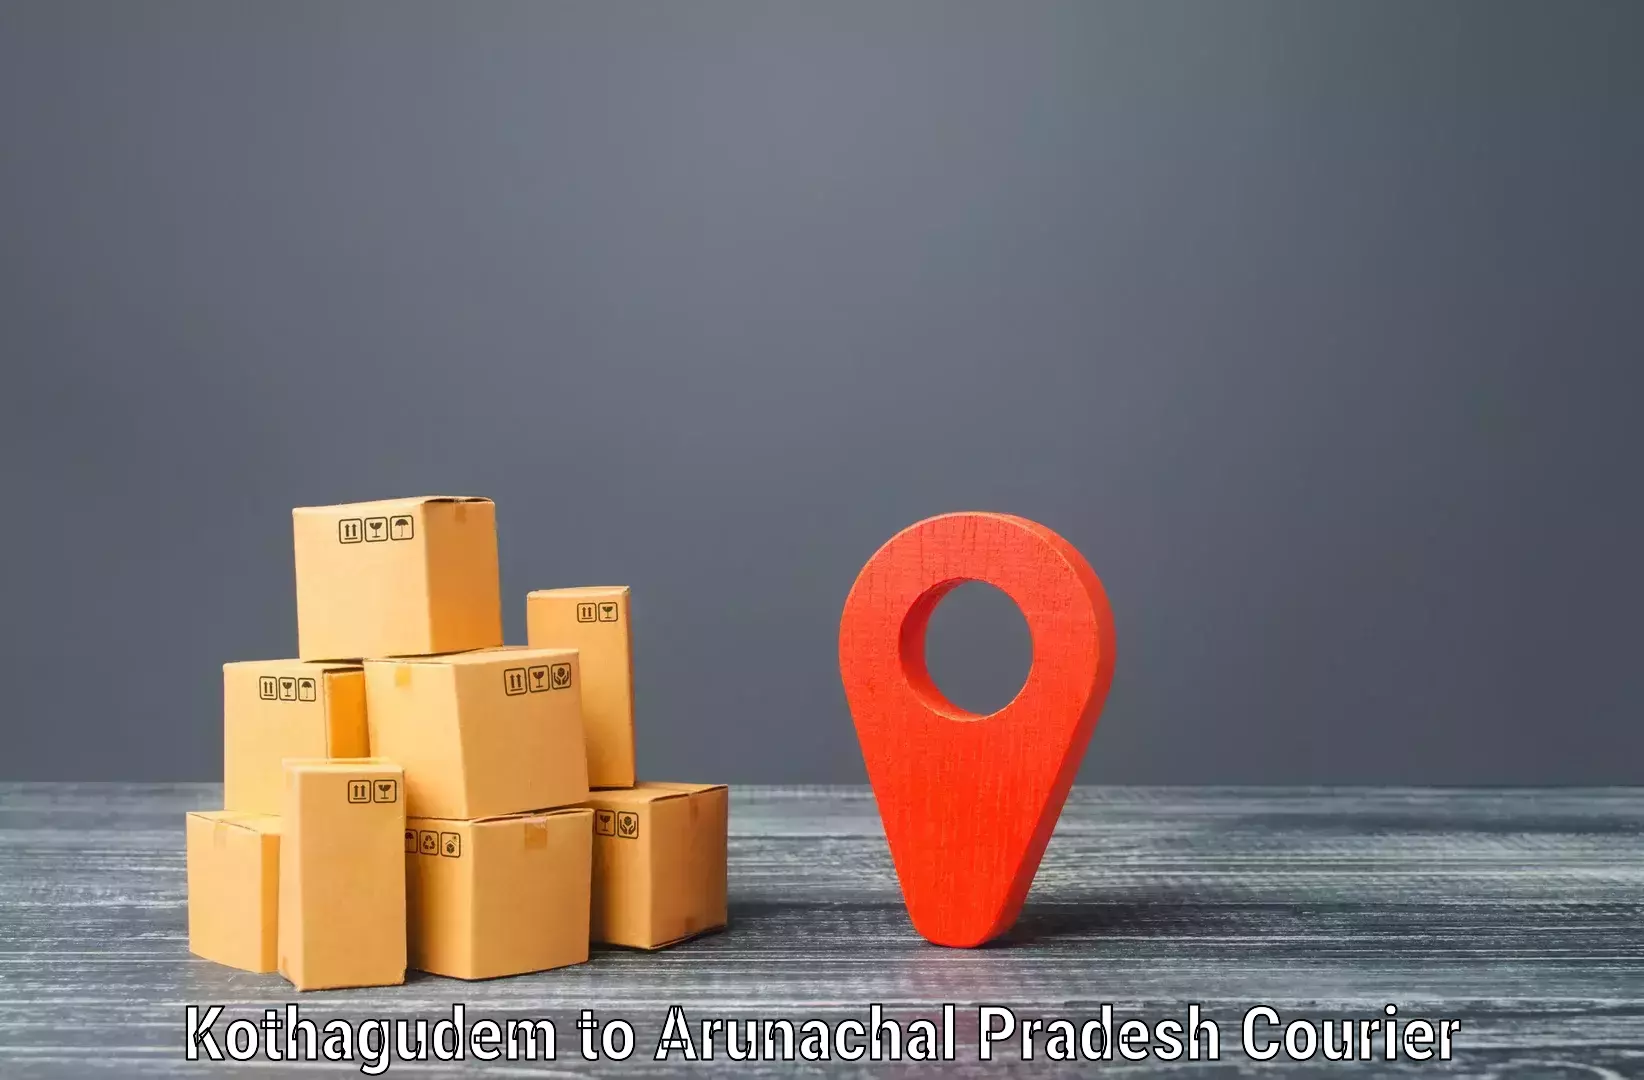 Package delivery network Kothagudem to Arunachal Pradesh